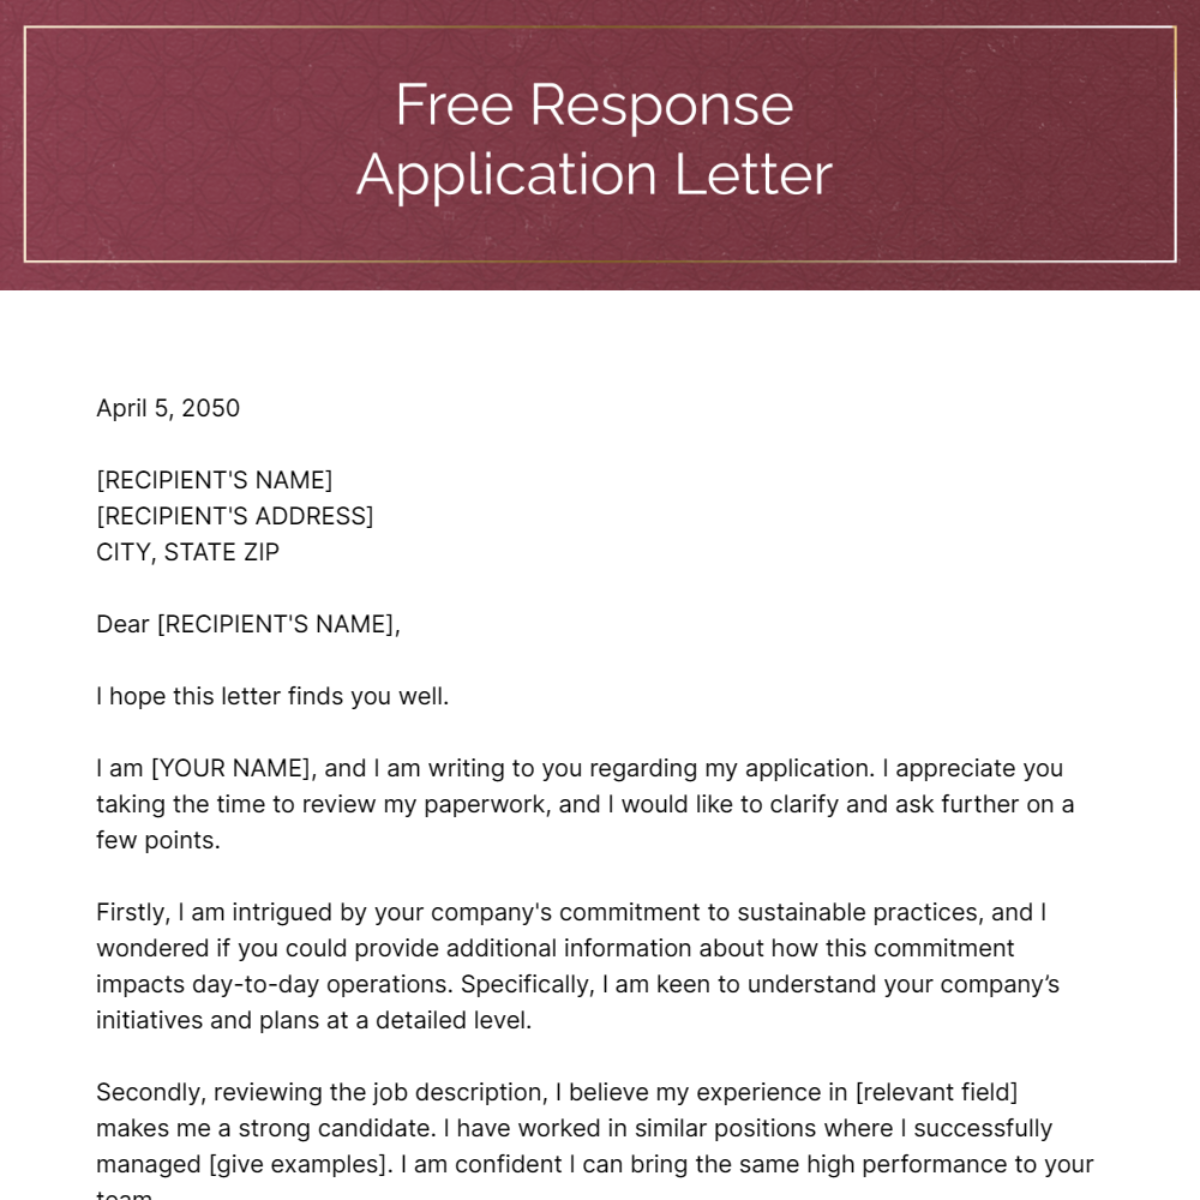 Free Response Application Letter